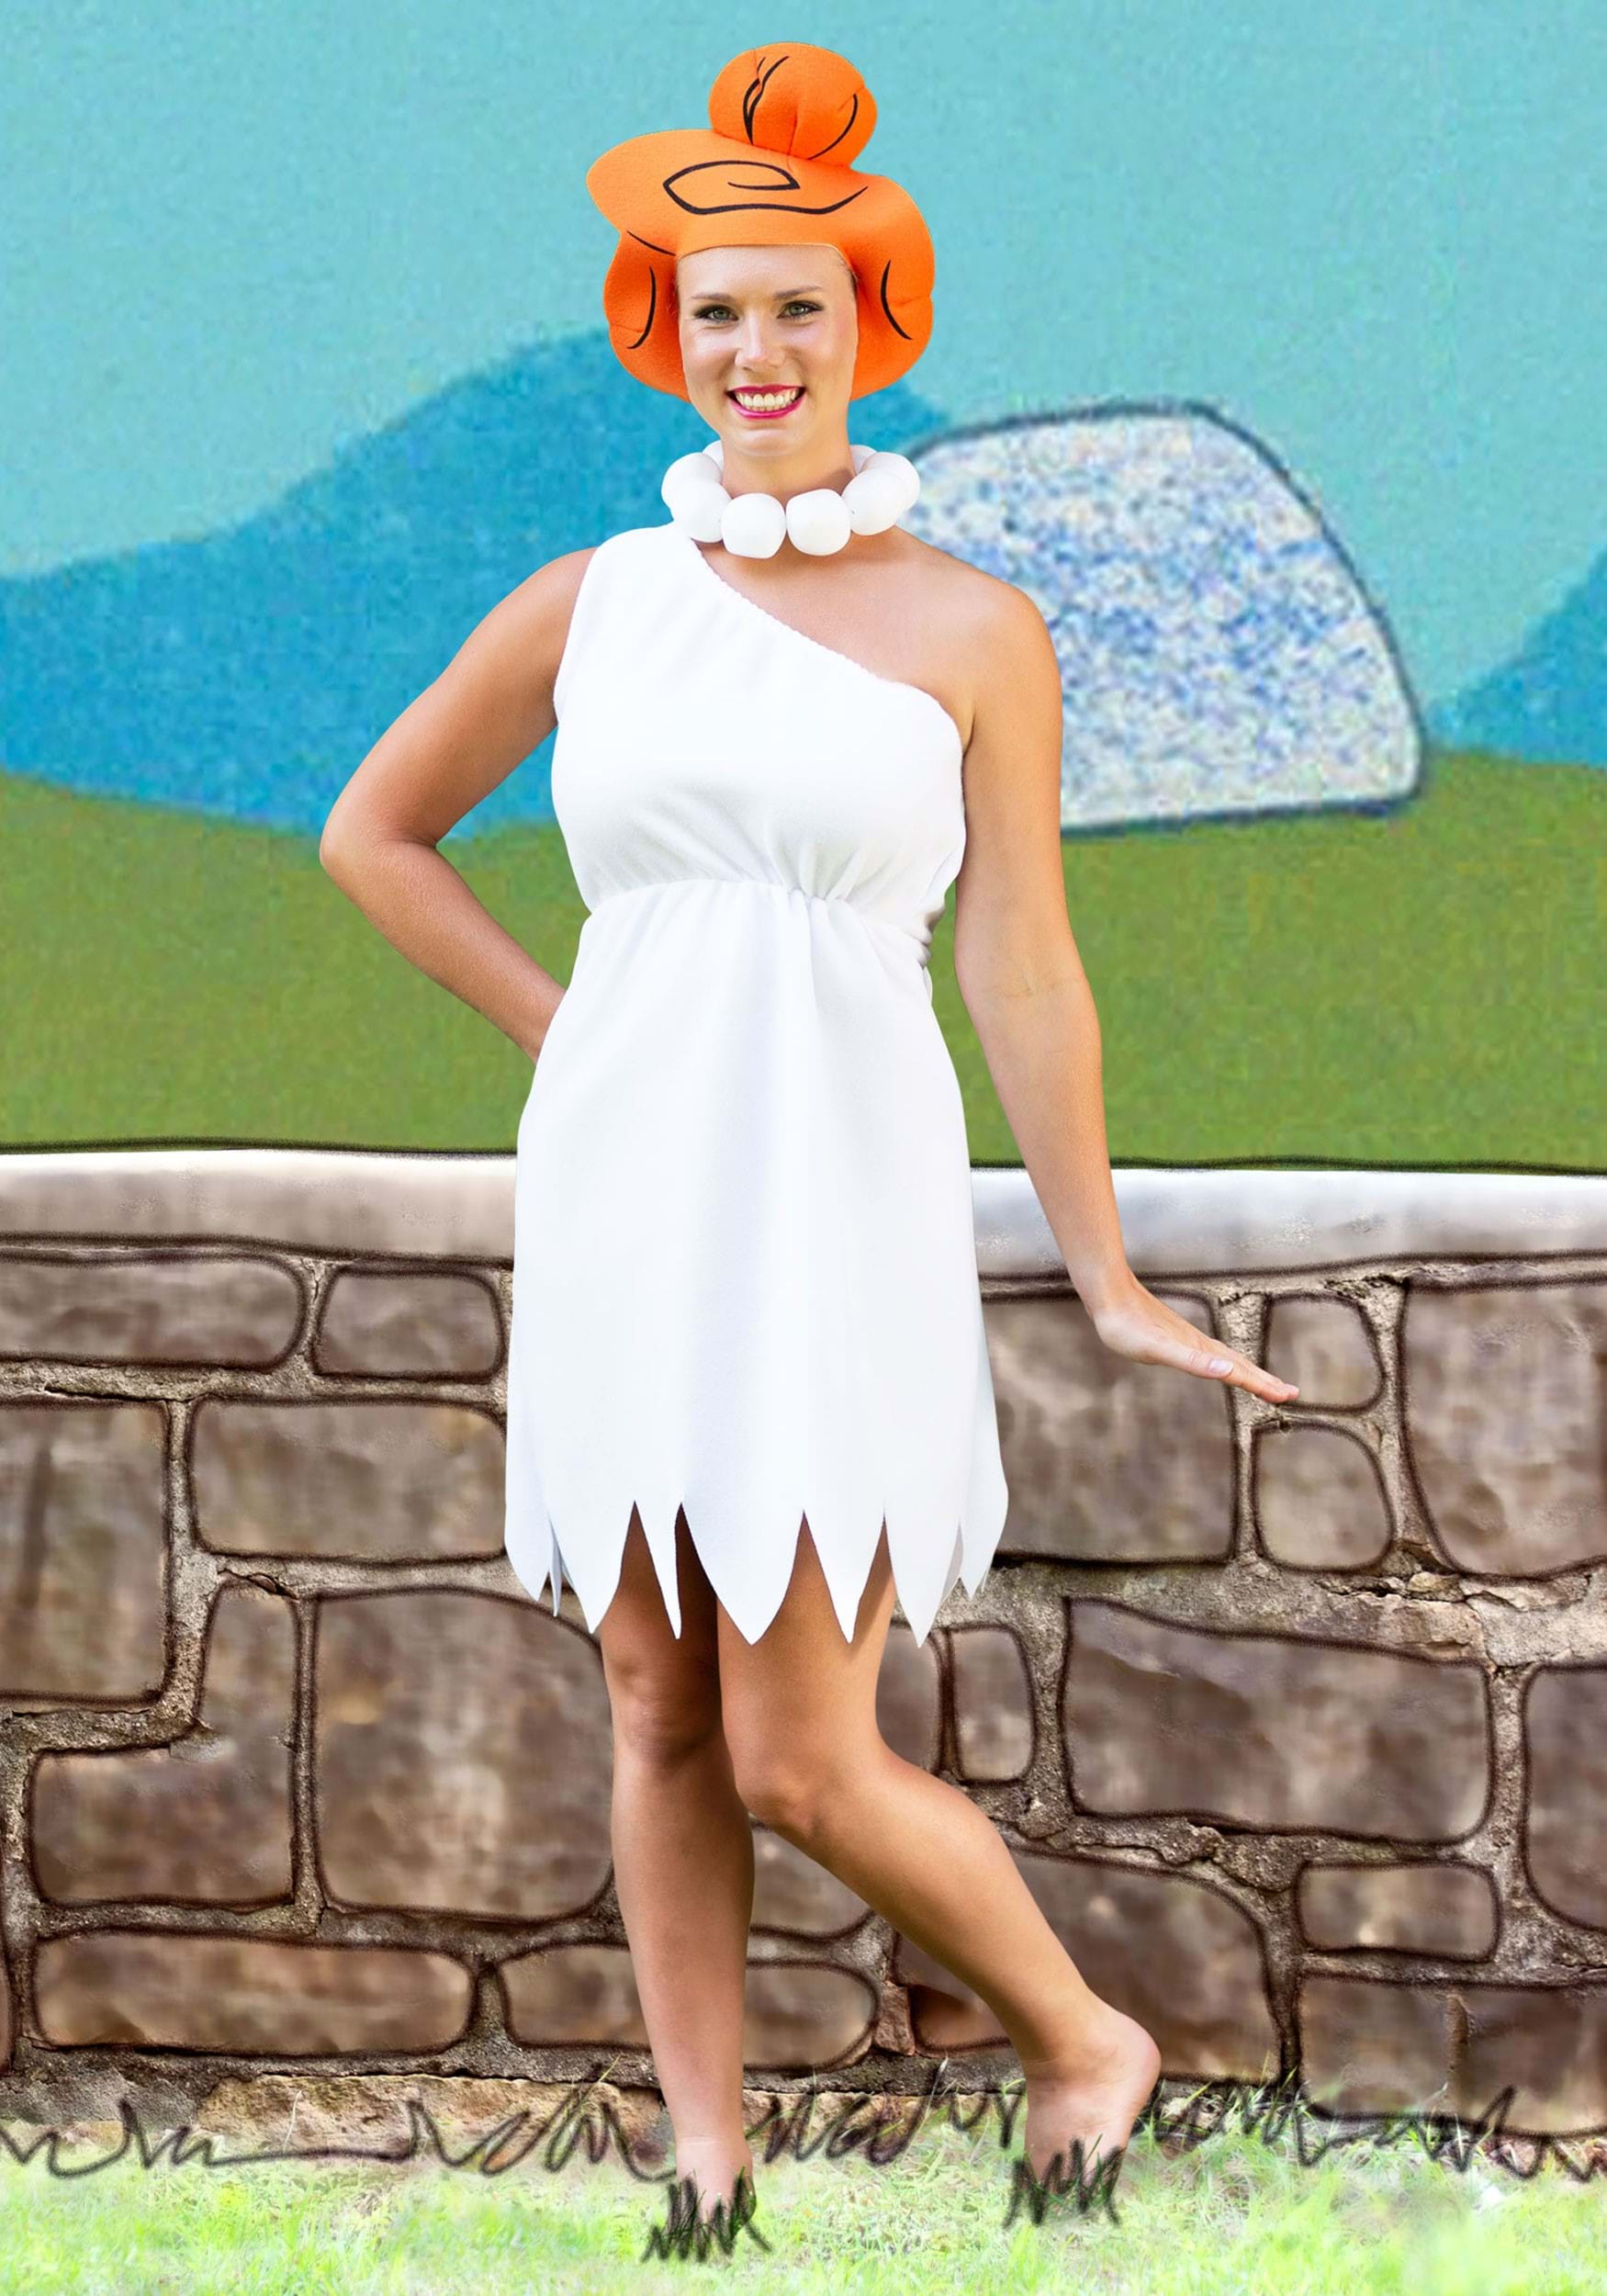 Women's Plus Size Wilma Flintstone Costume , Cartoon Character Costumes